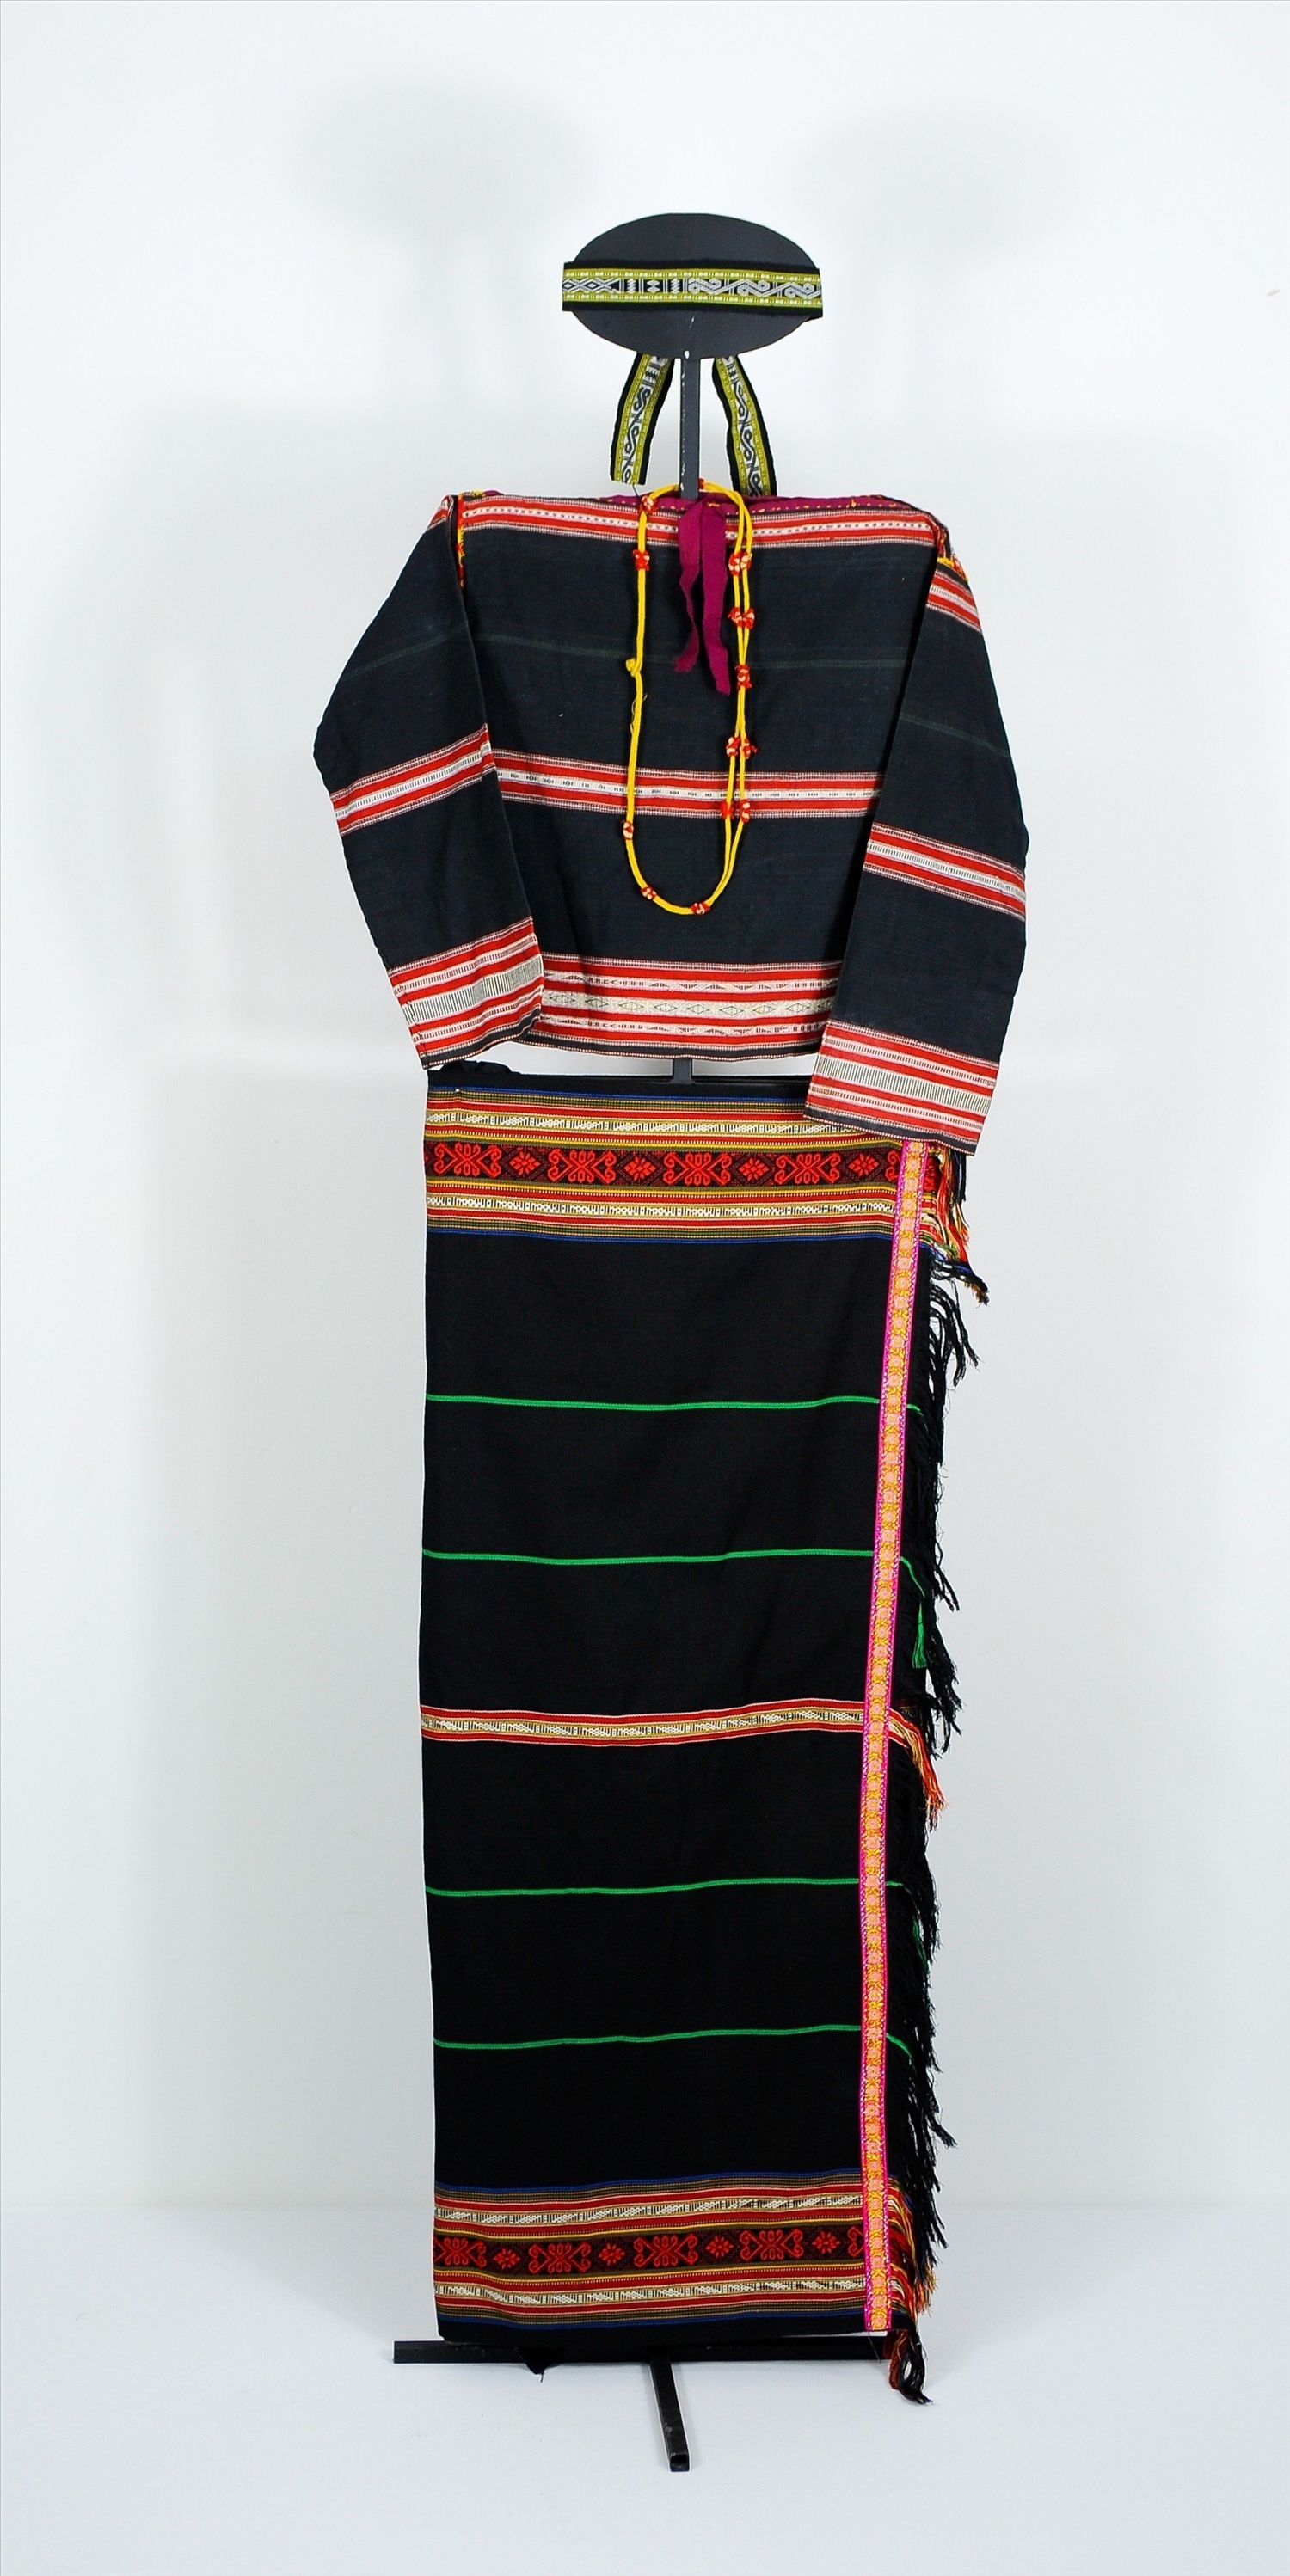 Trang phục nữ của dân tộc Gia Rai (Ảnh: Bá Tính)